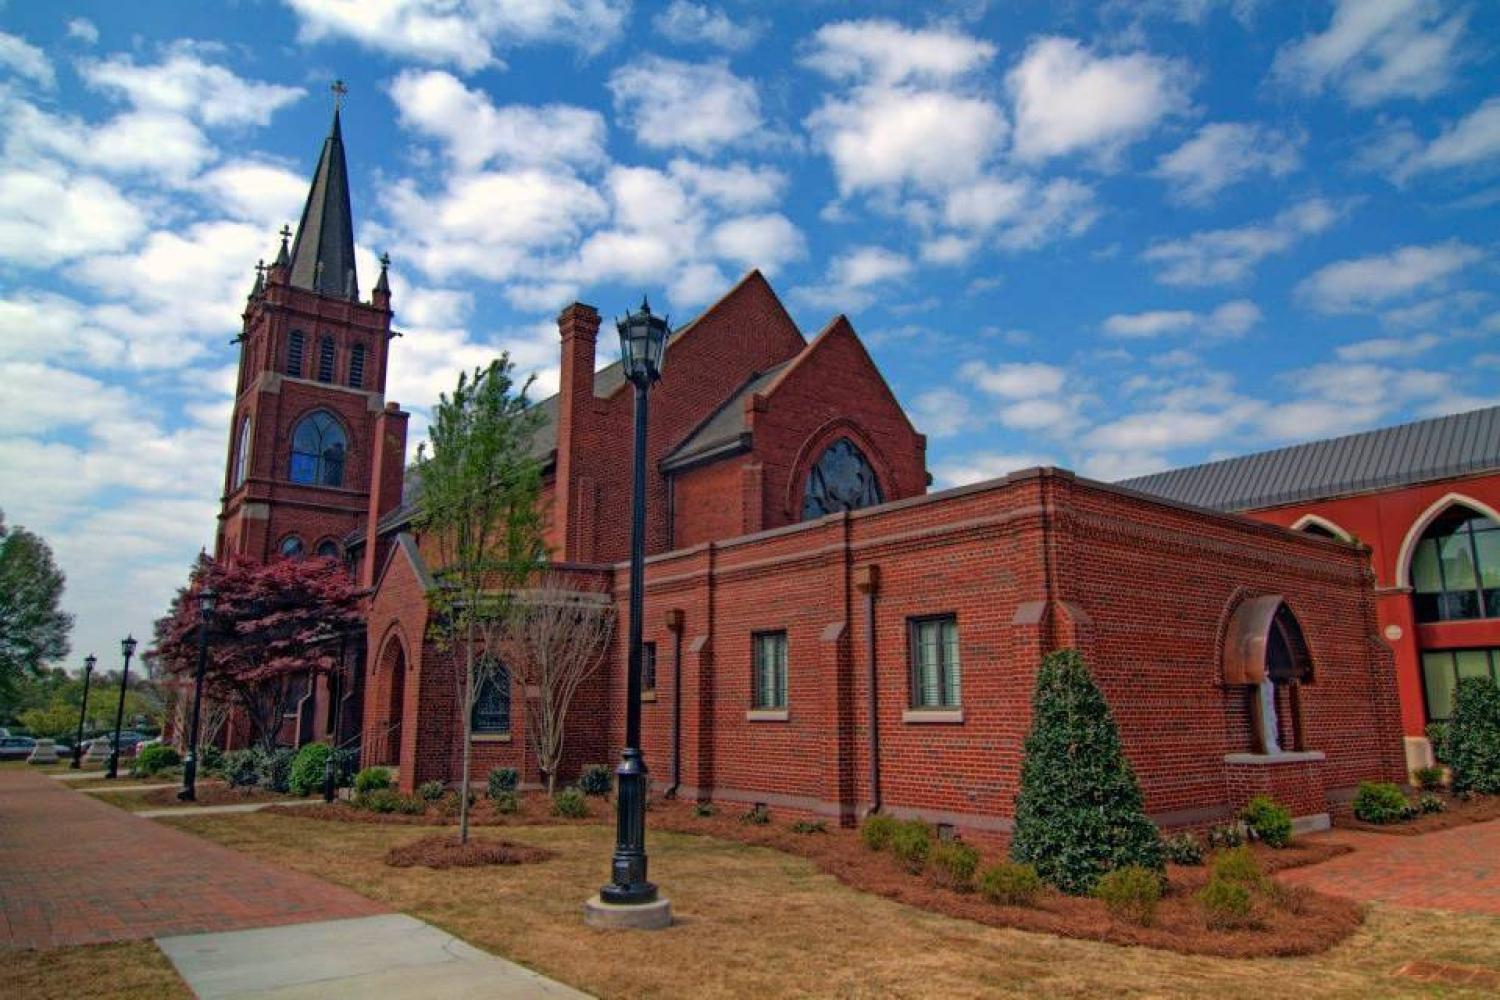 The Exterior of St. Mary's Catholic Church in Greenville, South Carolina